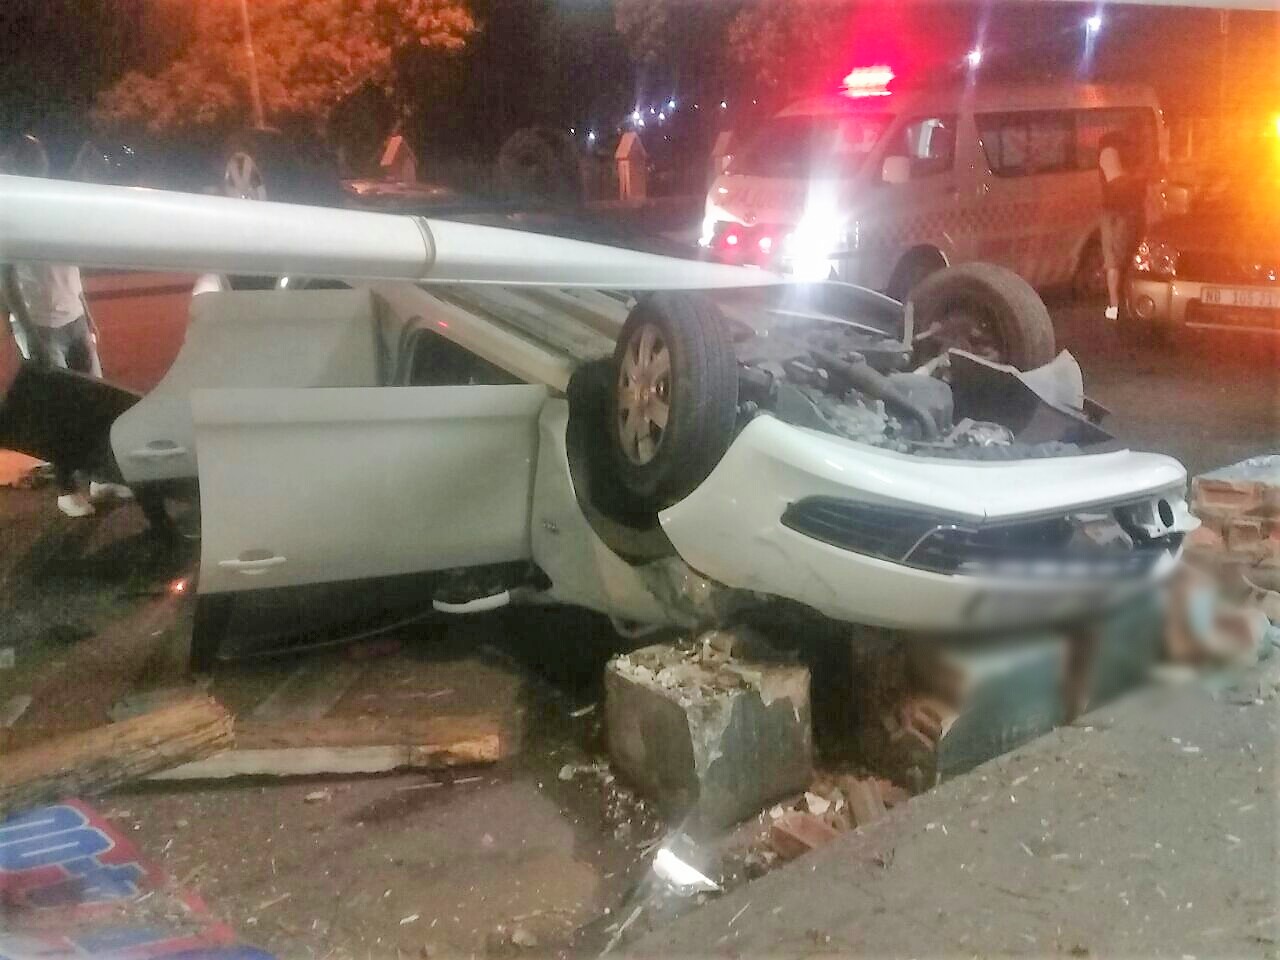 6 Injured in early morning crash in Durban